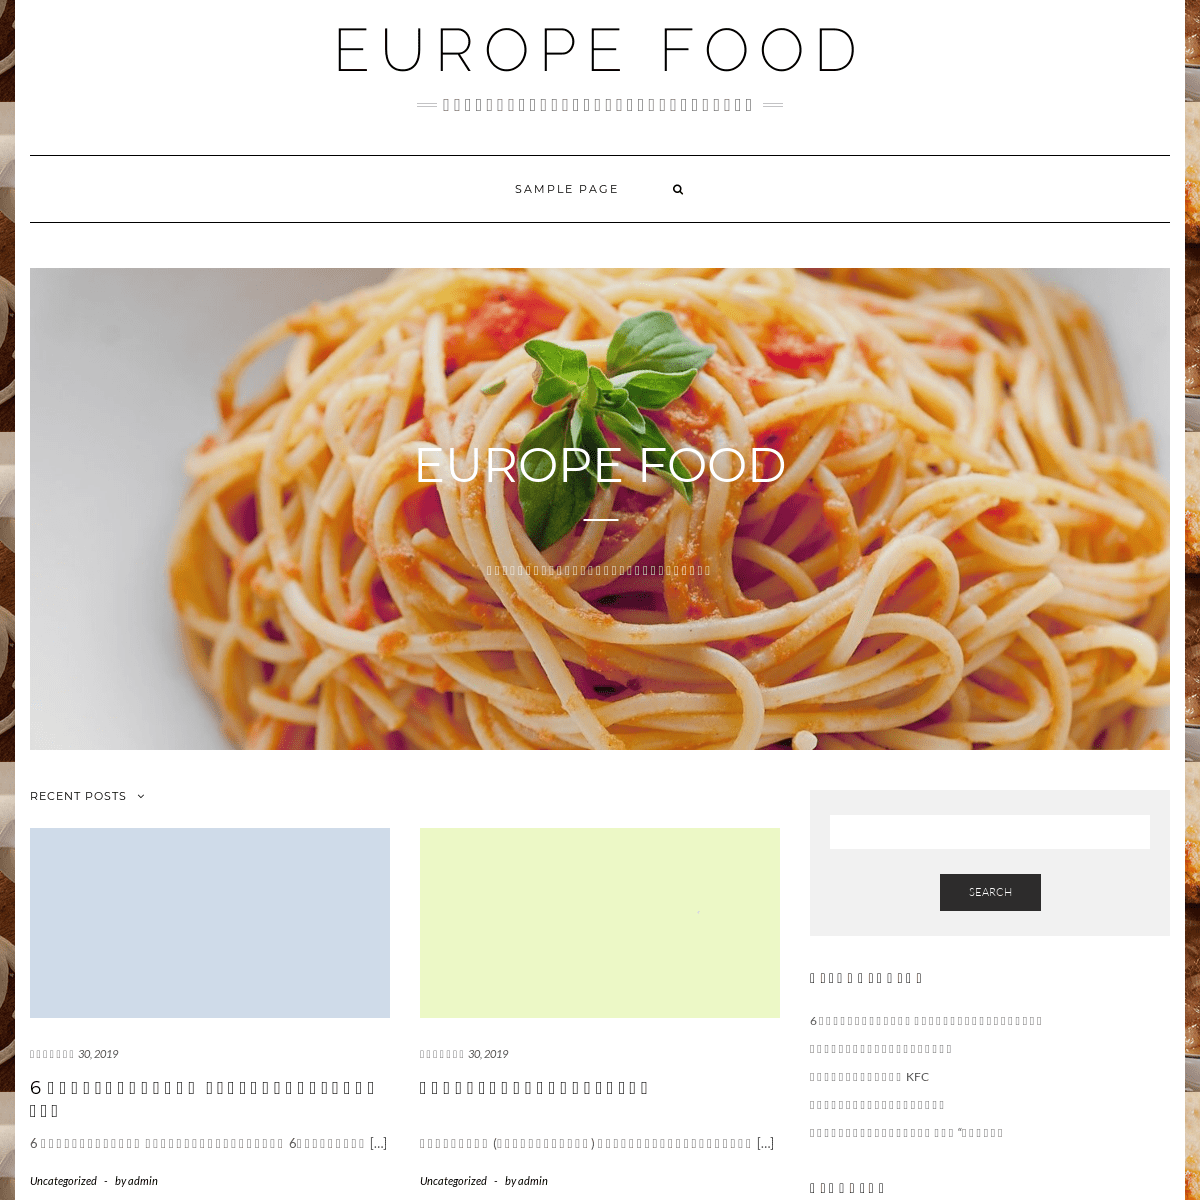 Europe Food - ยินดีต้อนรับสู่ครัวอาหารยุโรป